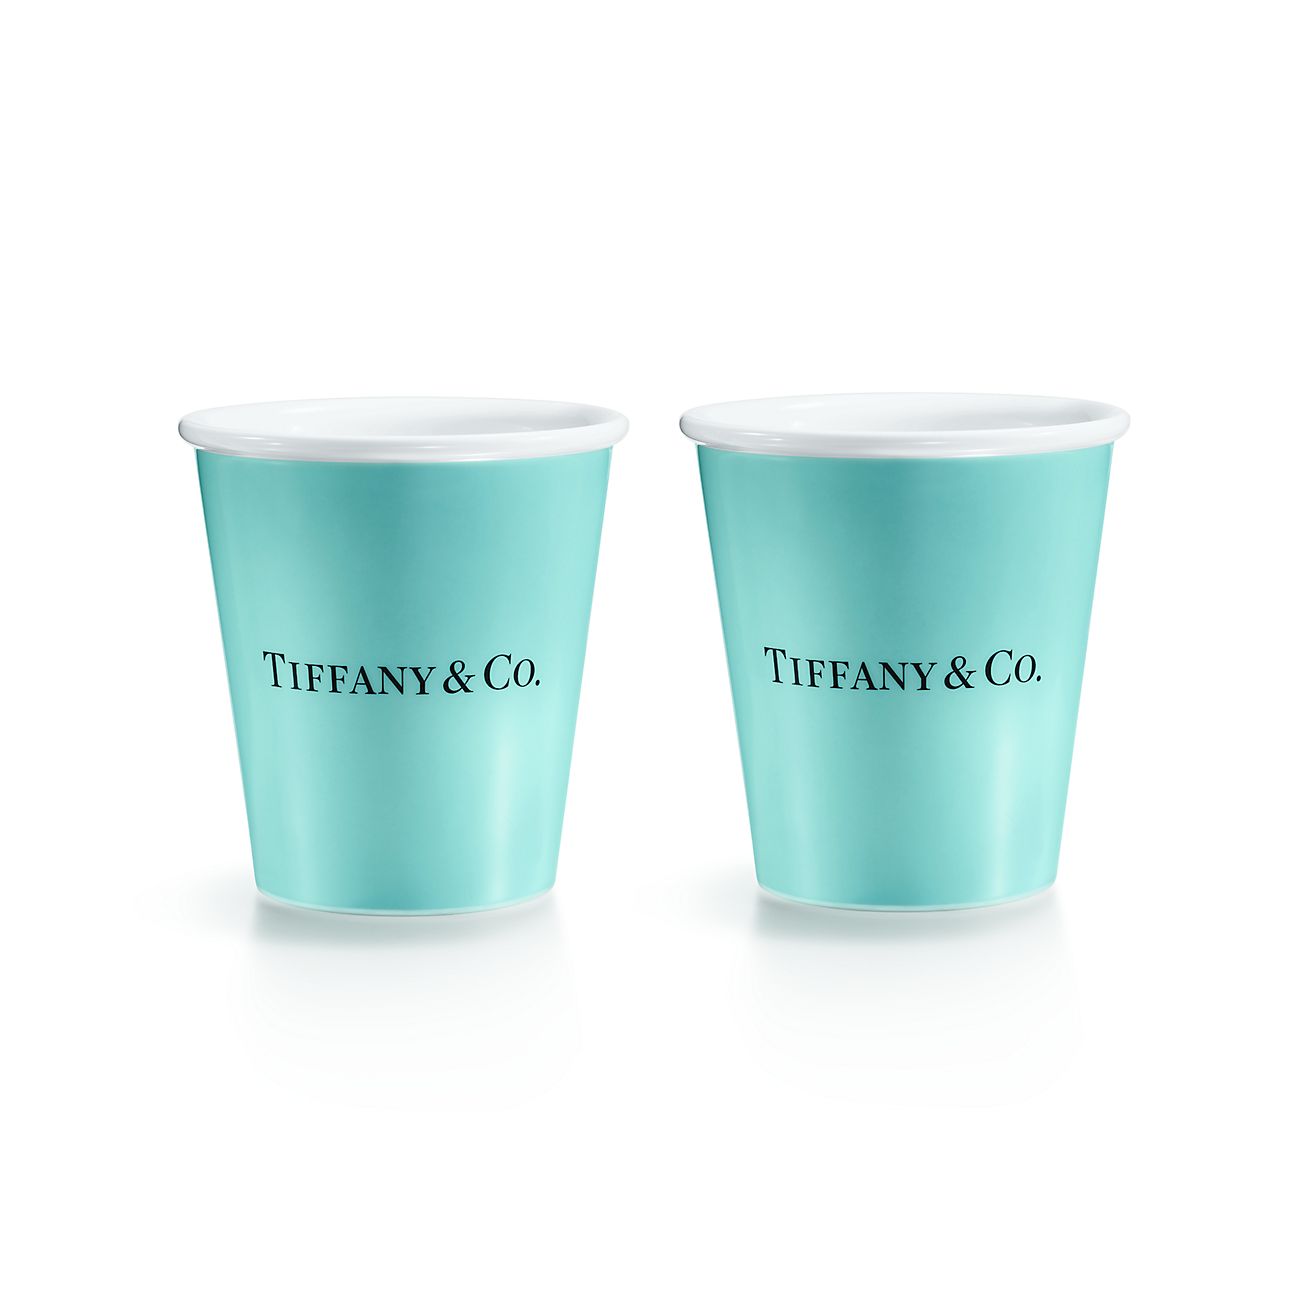 https://media.tiffany.com/is/image/Tiffany/EcomItemL2/everyday-objectstiffany-coffee-cups-60558930_974163_ED_M.jpg